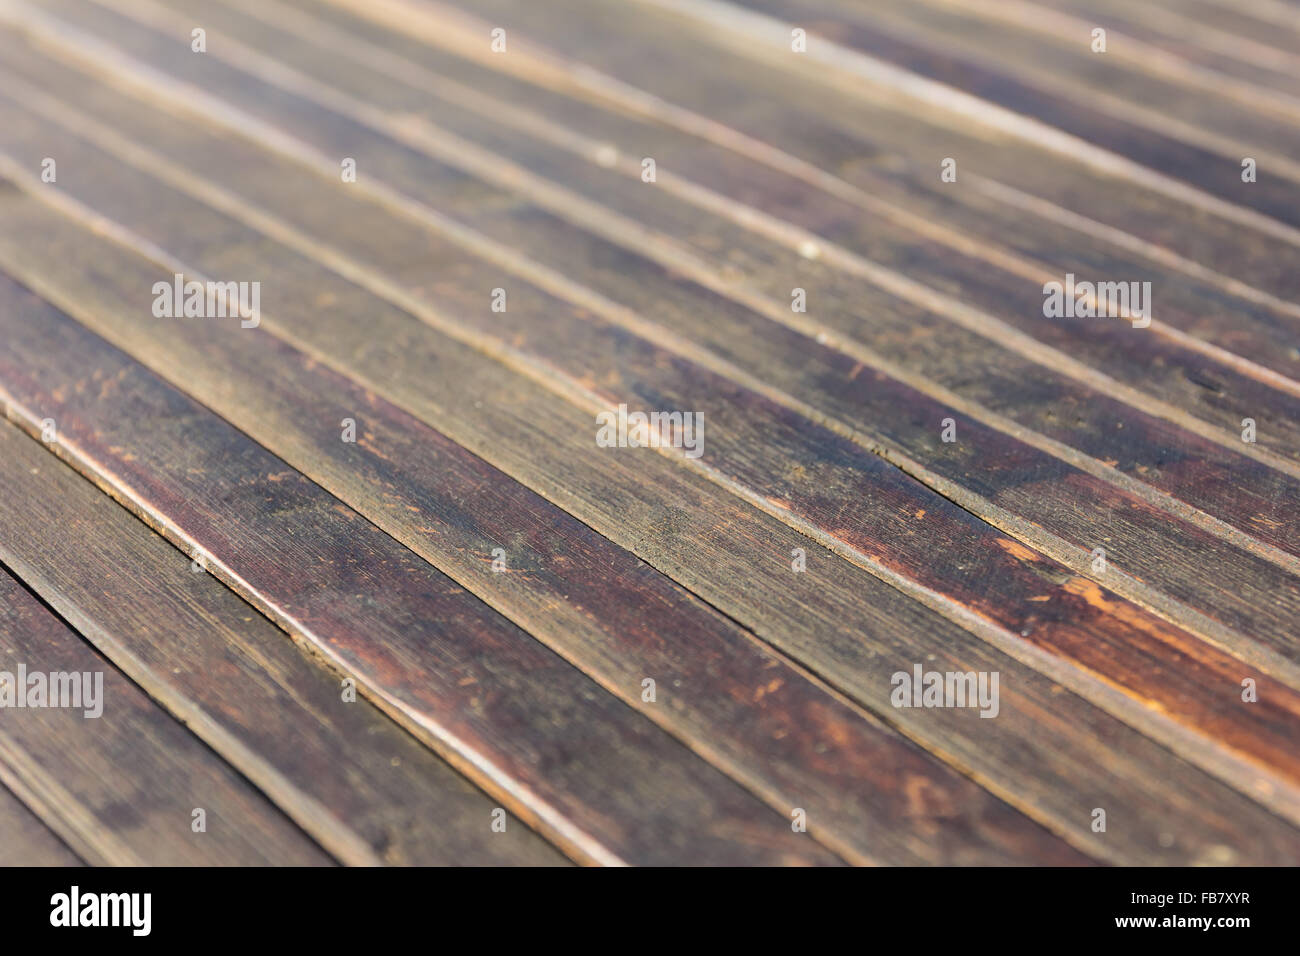 perspective wooden floor ,image in soft focusing Stock Photo